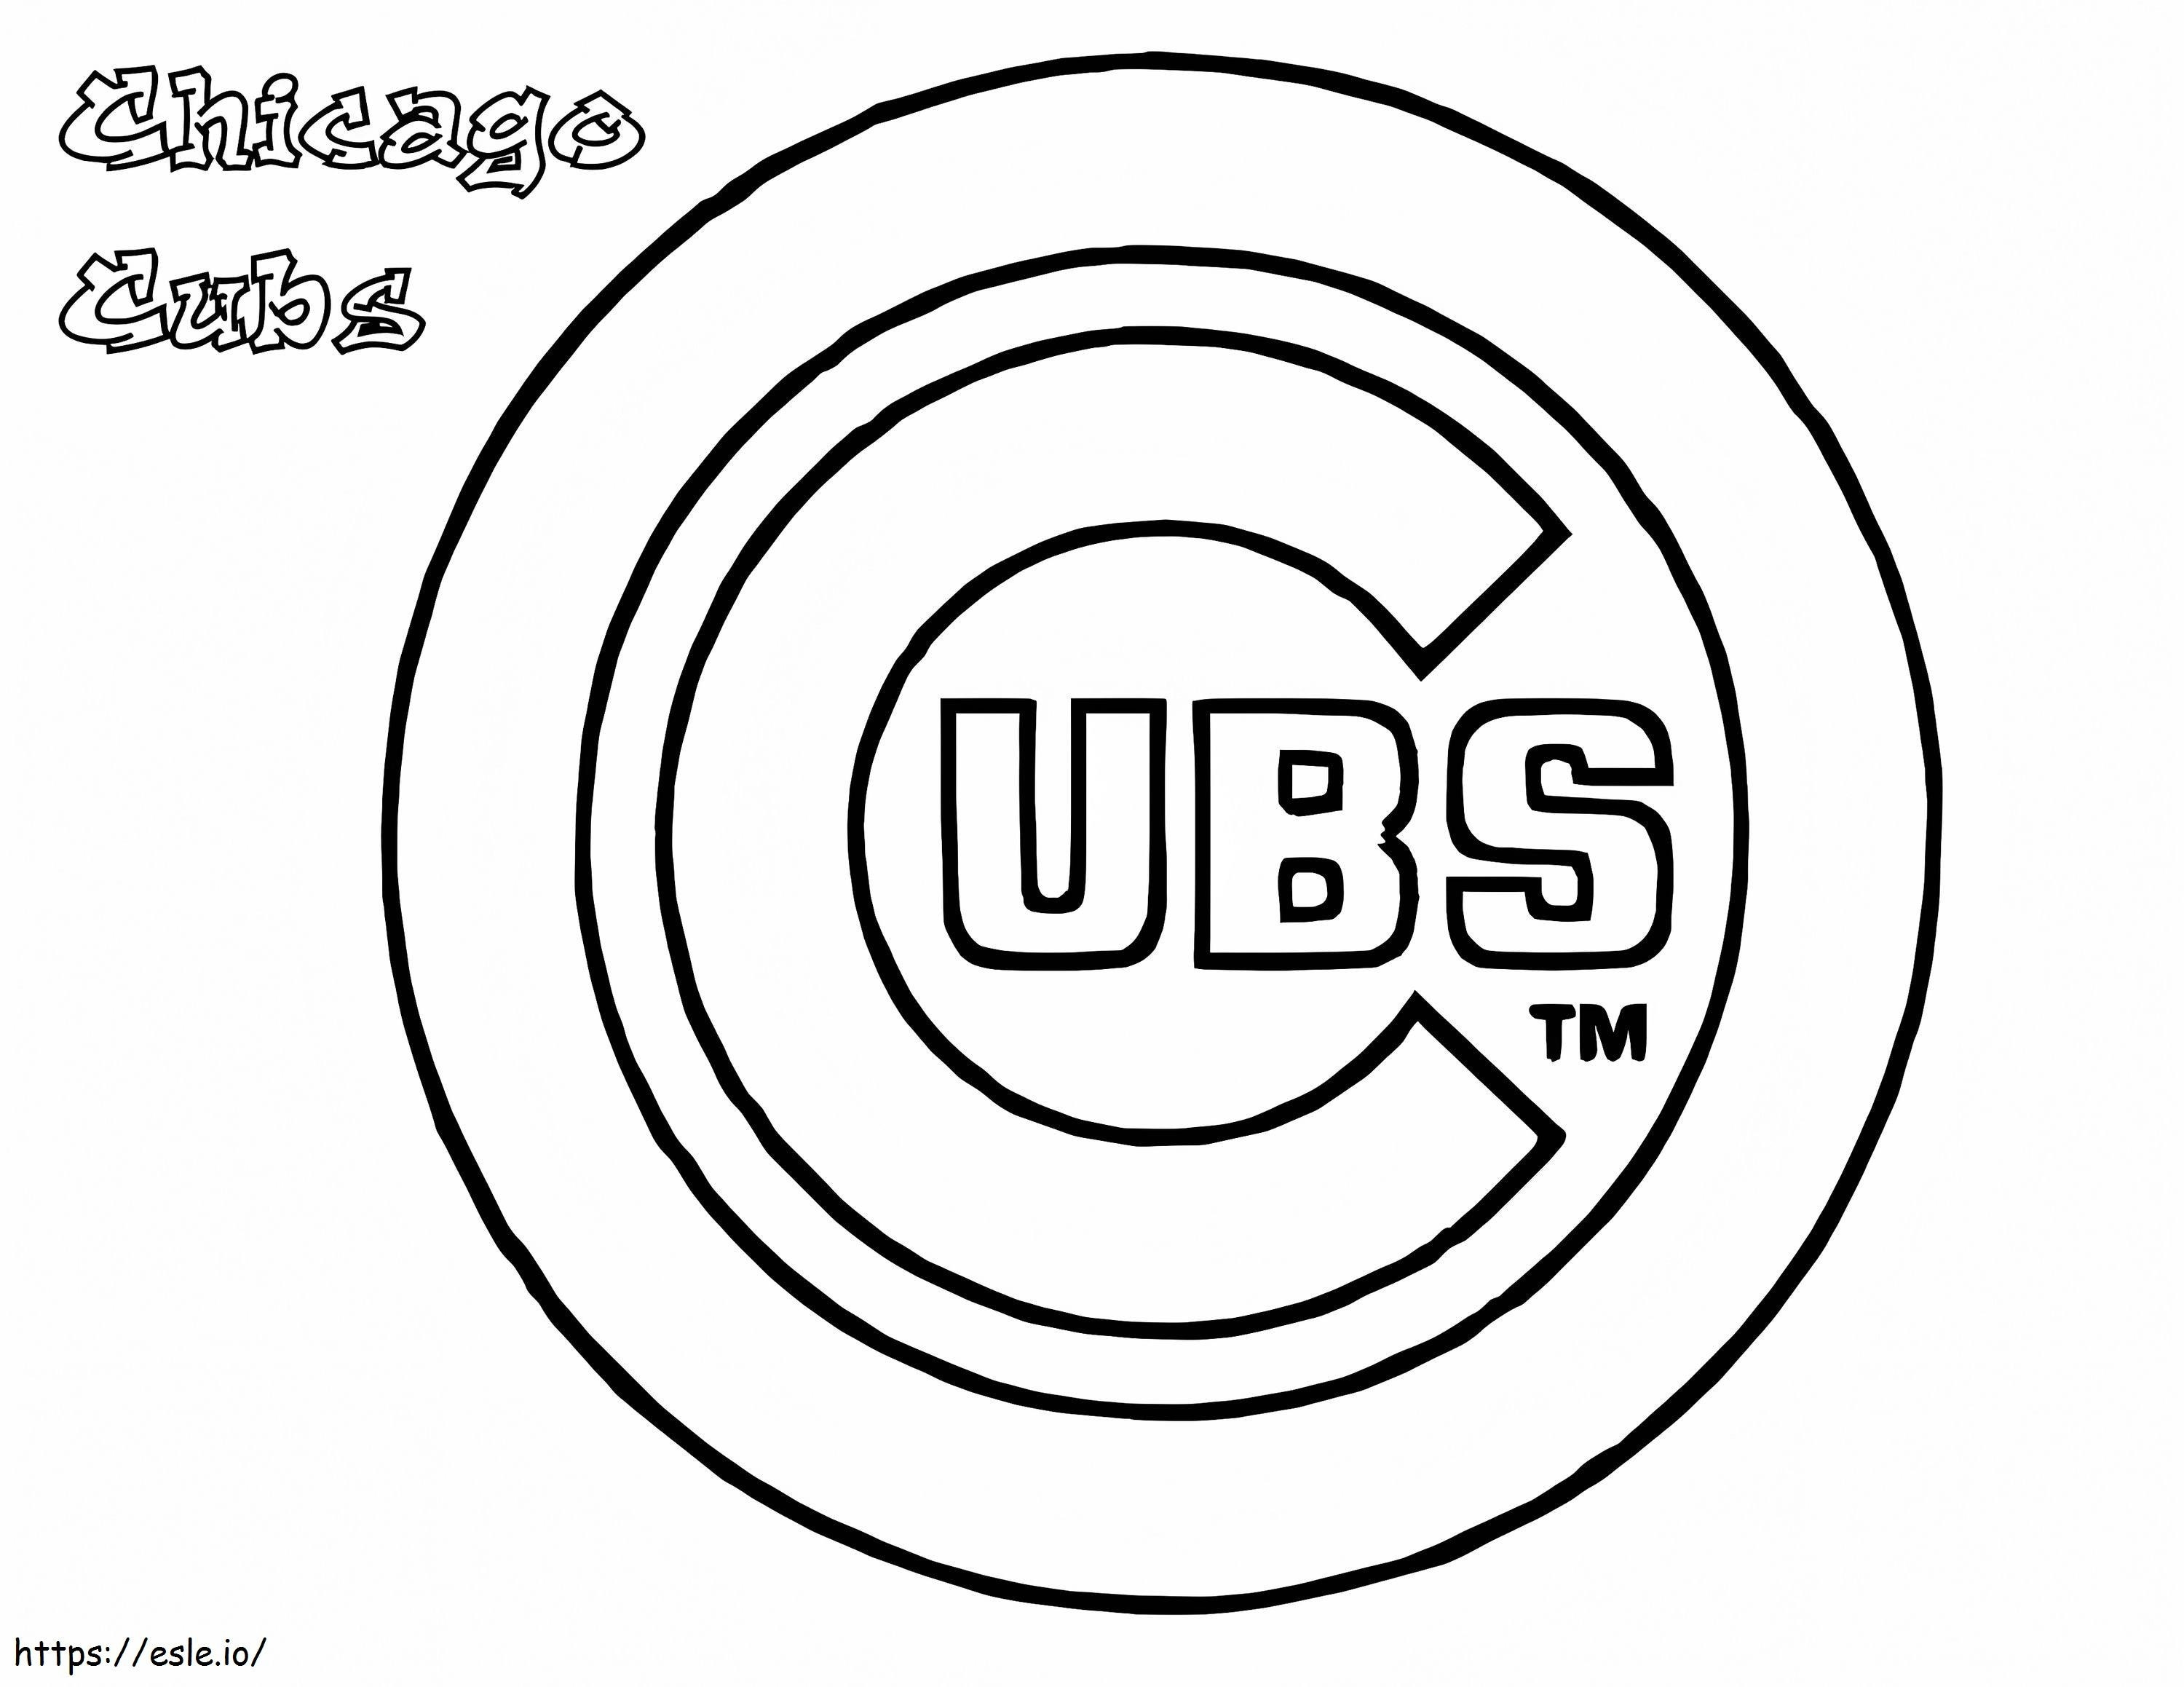 Chicago Cubs 1 kolorowanka